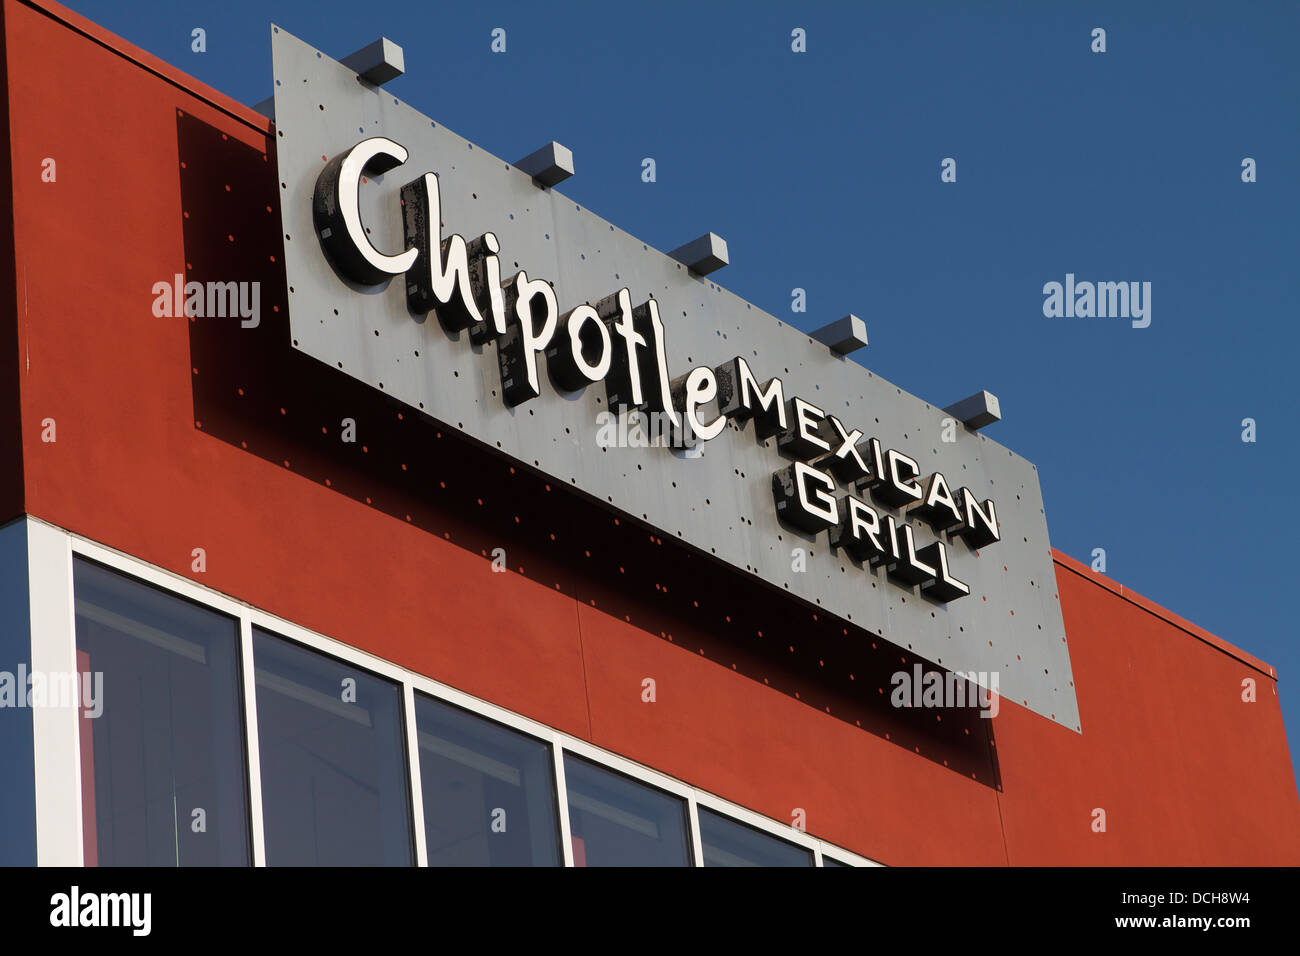 Chipotle Mexican grill in Santa Ana Southern California USA Stock Photo